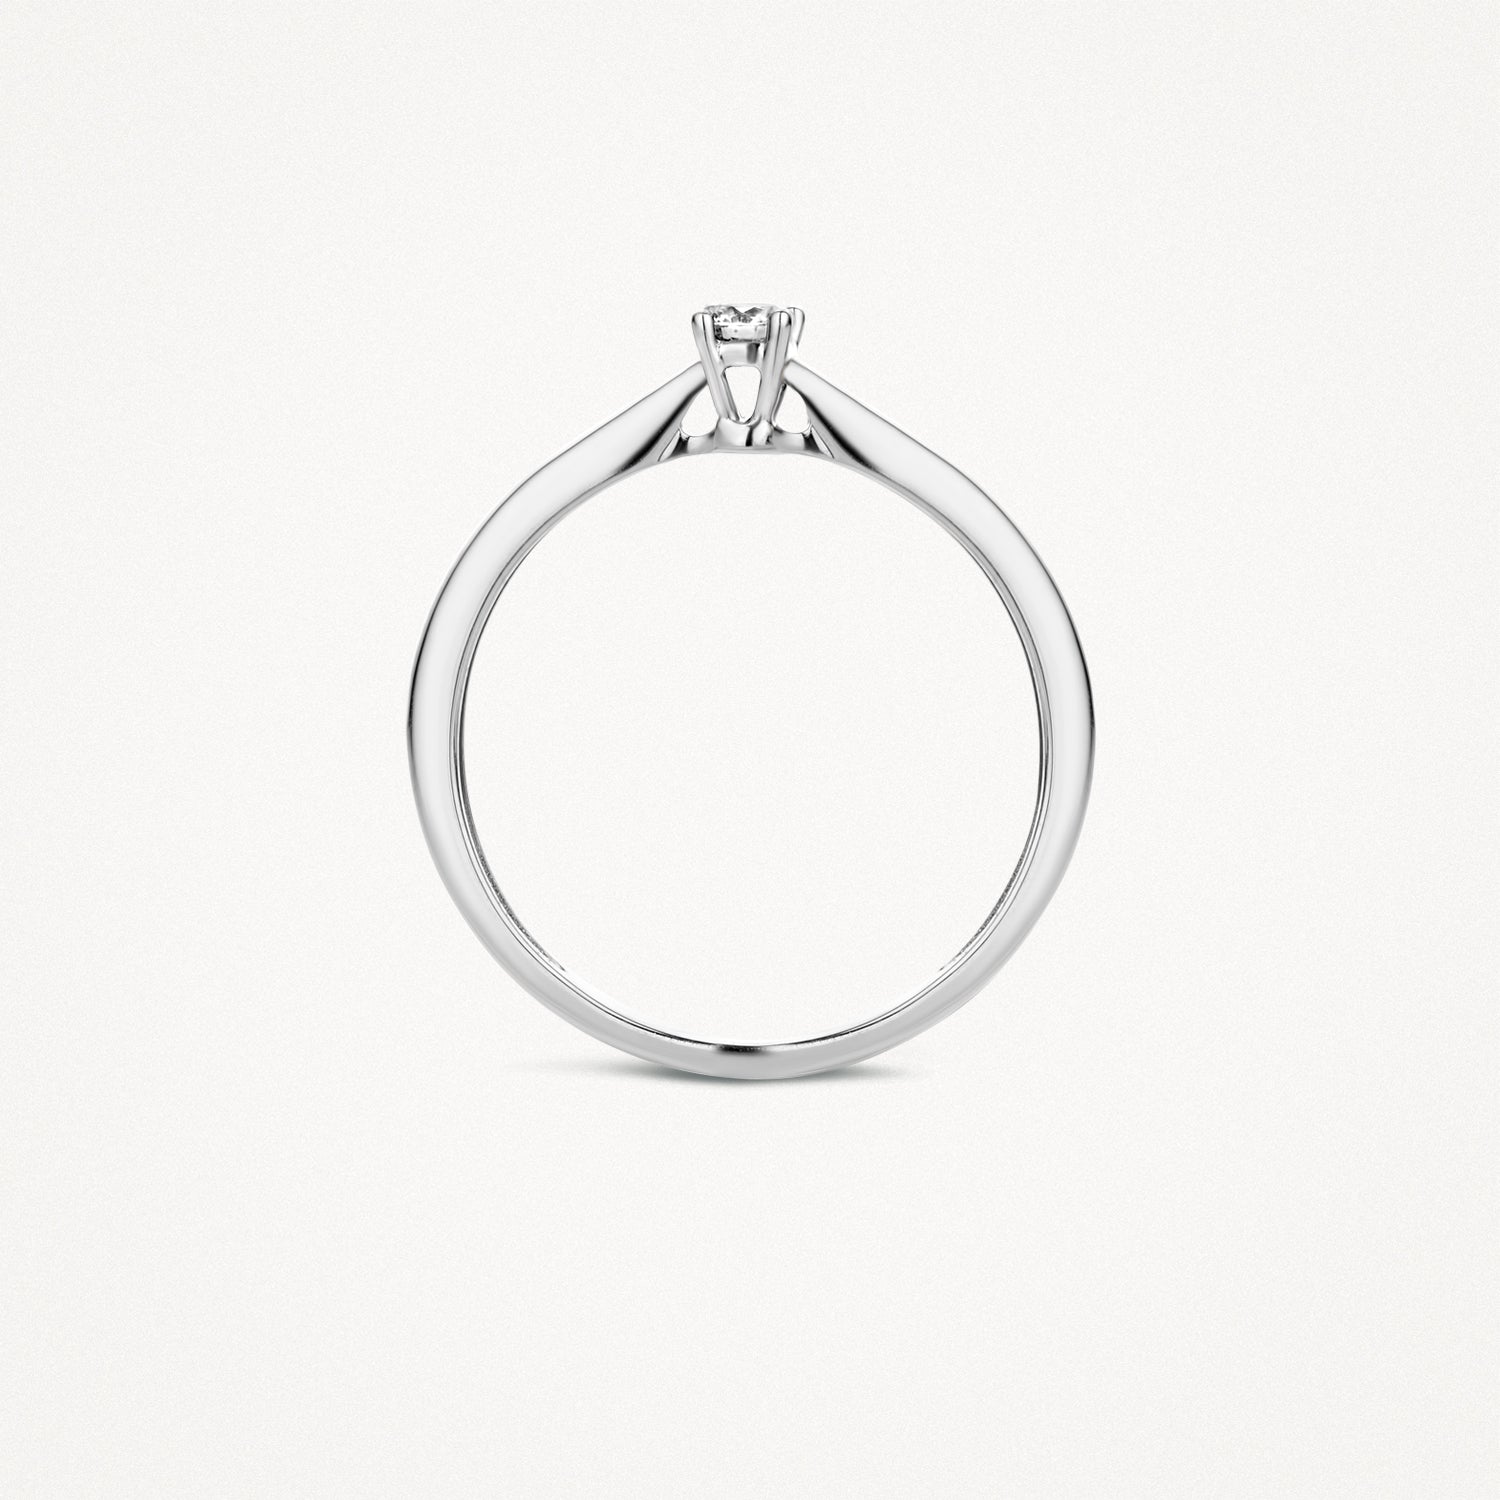 Ring 1622WDI - 14k White gold with Diamond